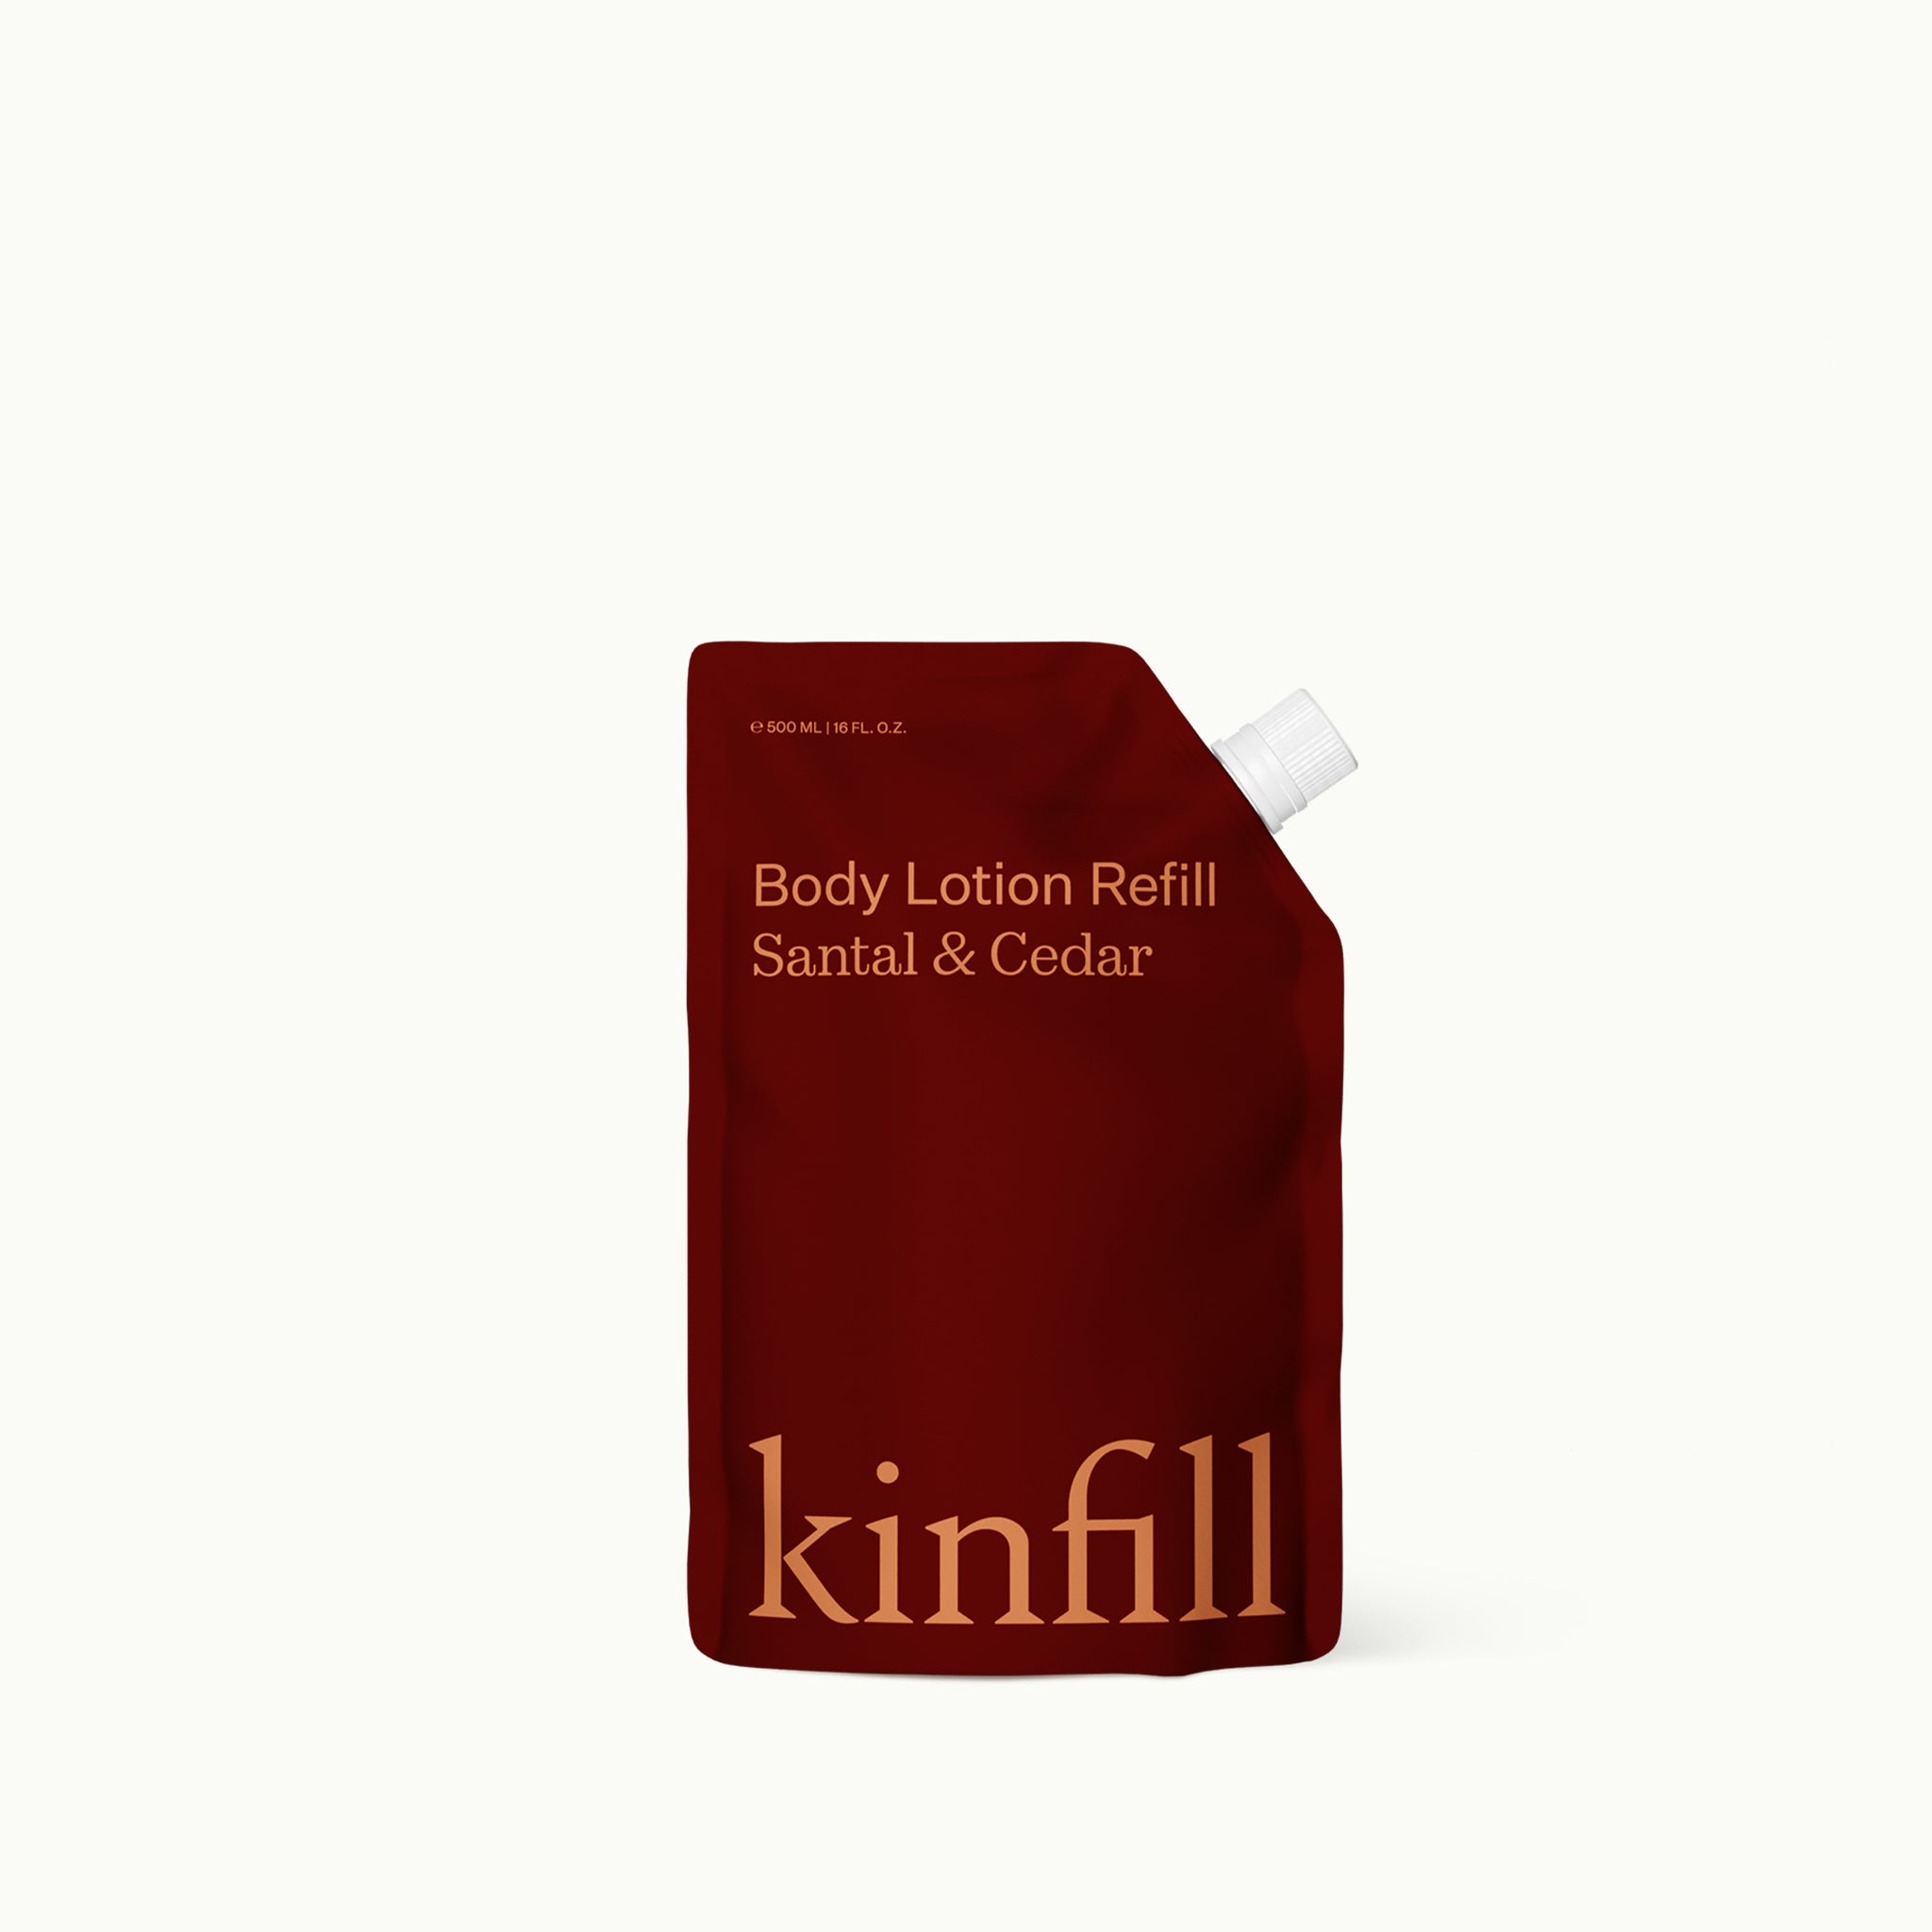 Body Lotion Refill • Santal & Cedar